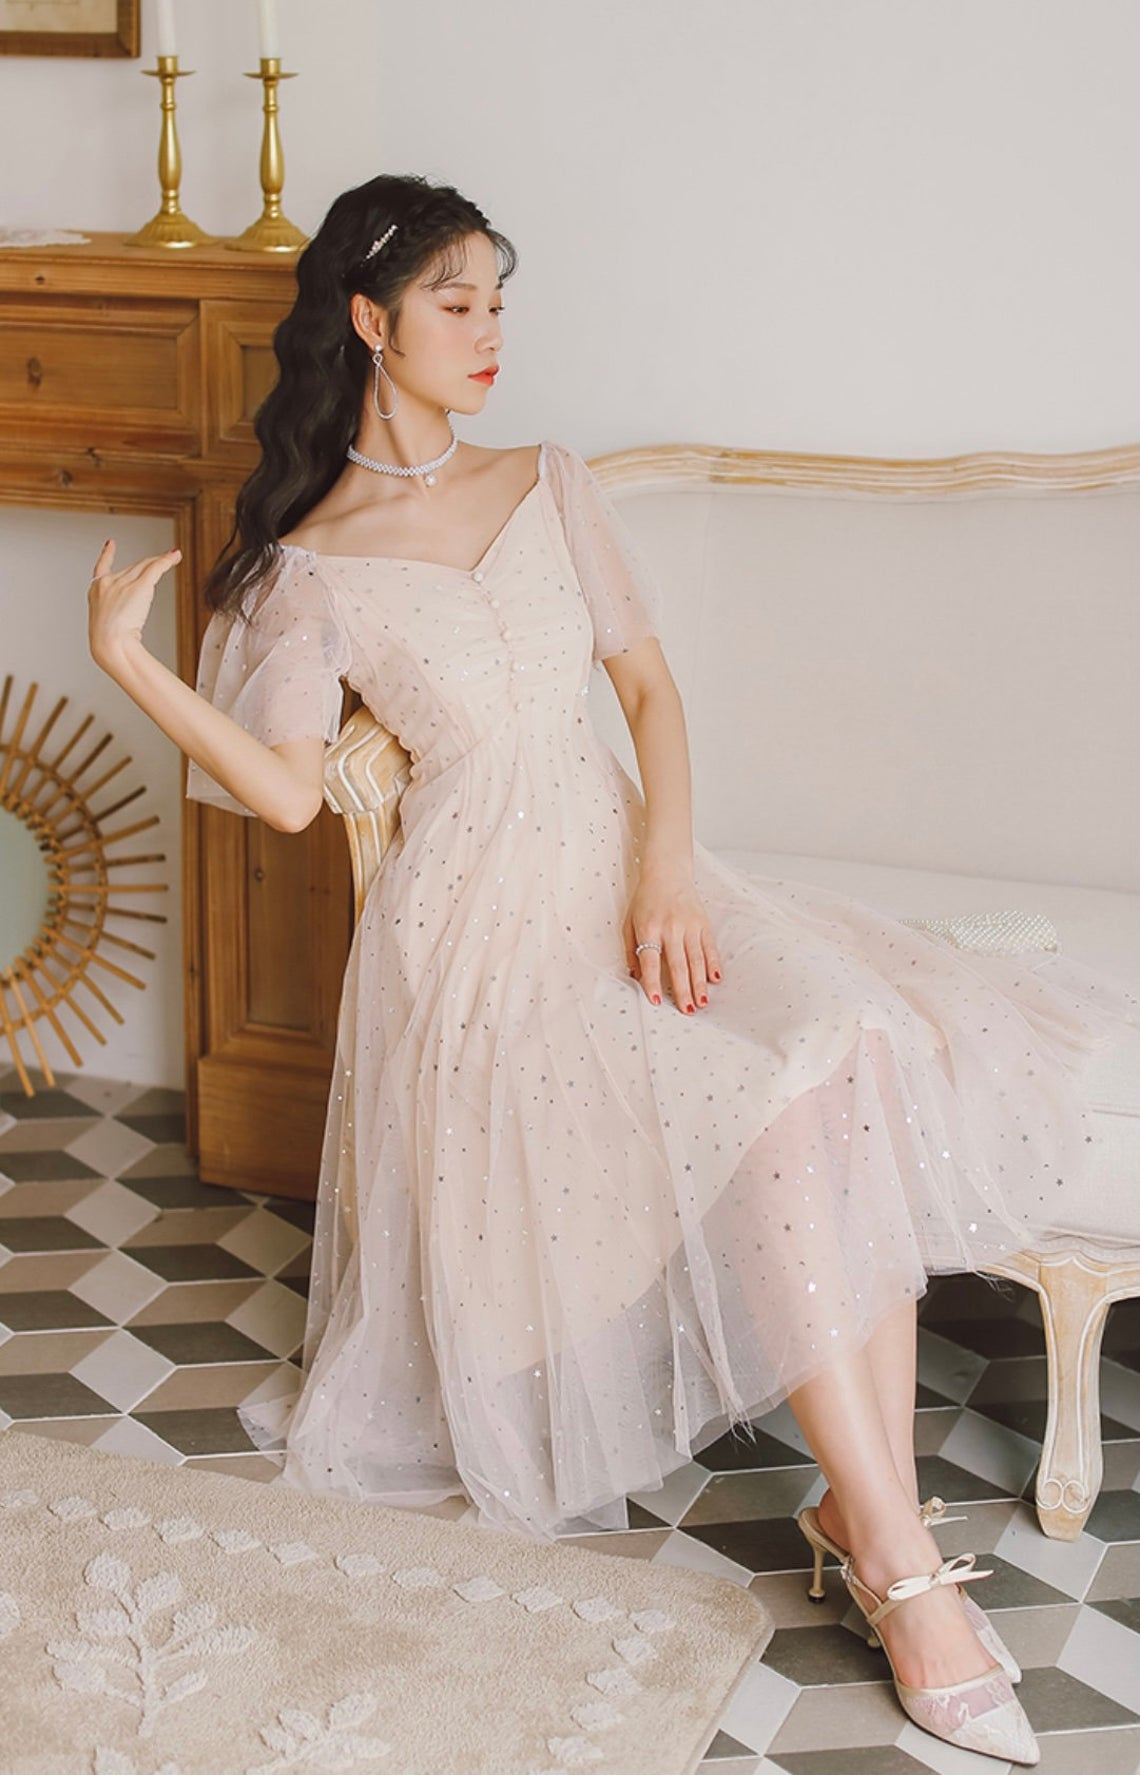 Fairy Dress-Princess Core Dress-Women Party Dress-Wedding Guest Dress-Graduation Dress-Spring Dresses-Fairy Prom Dress Y1333